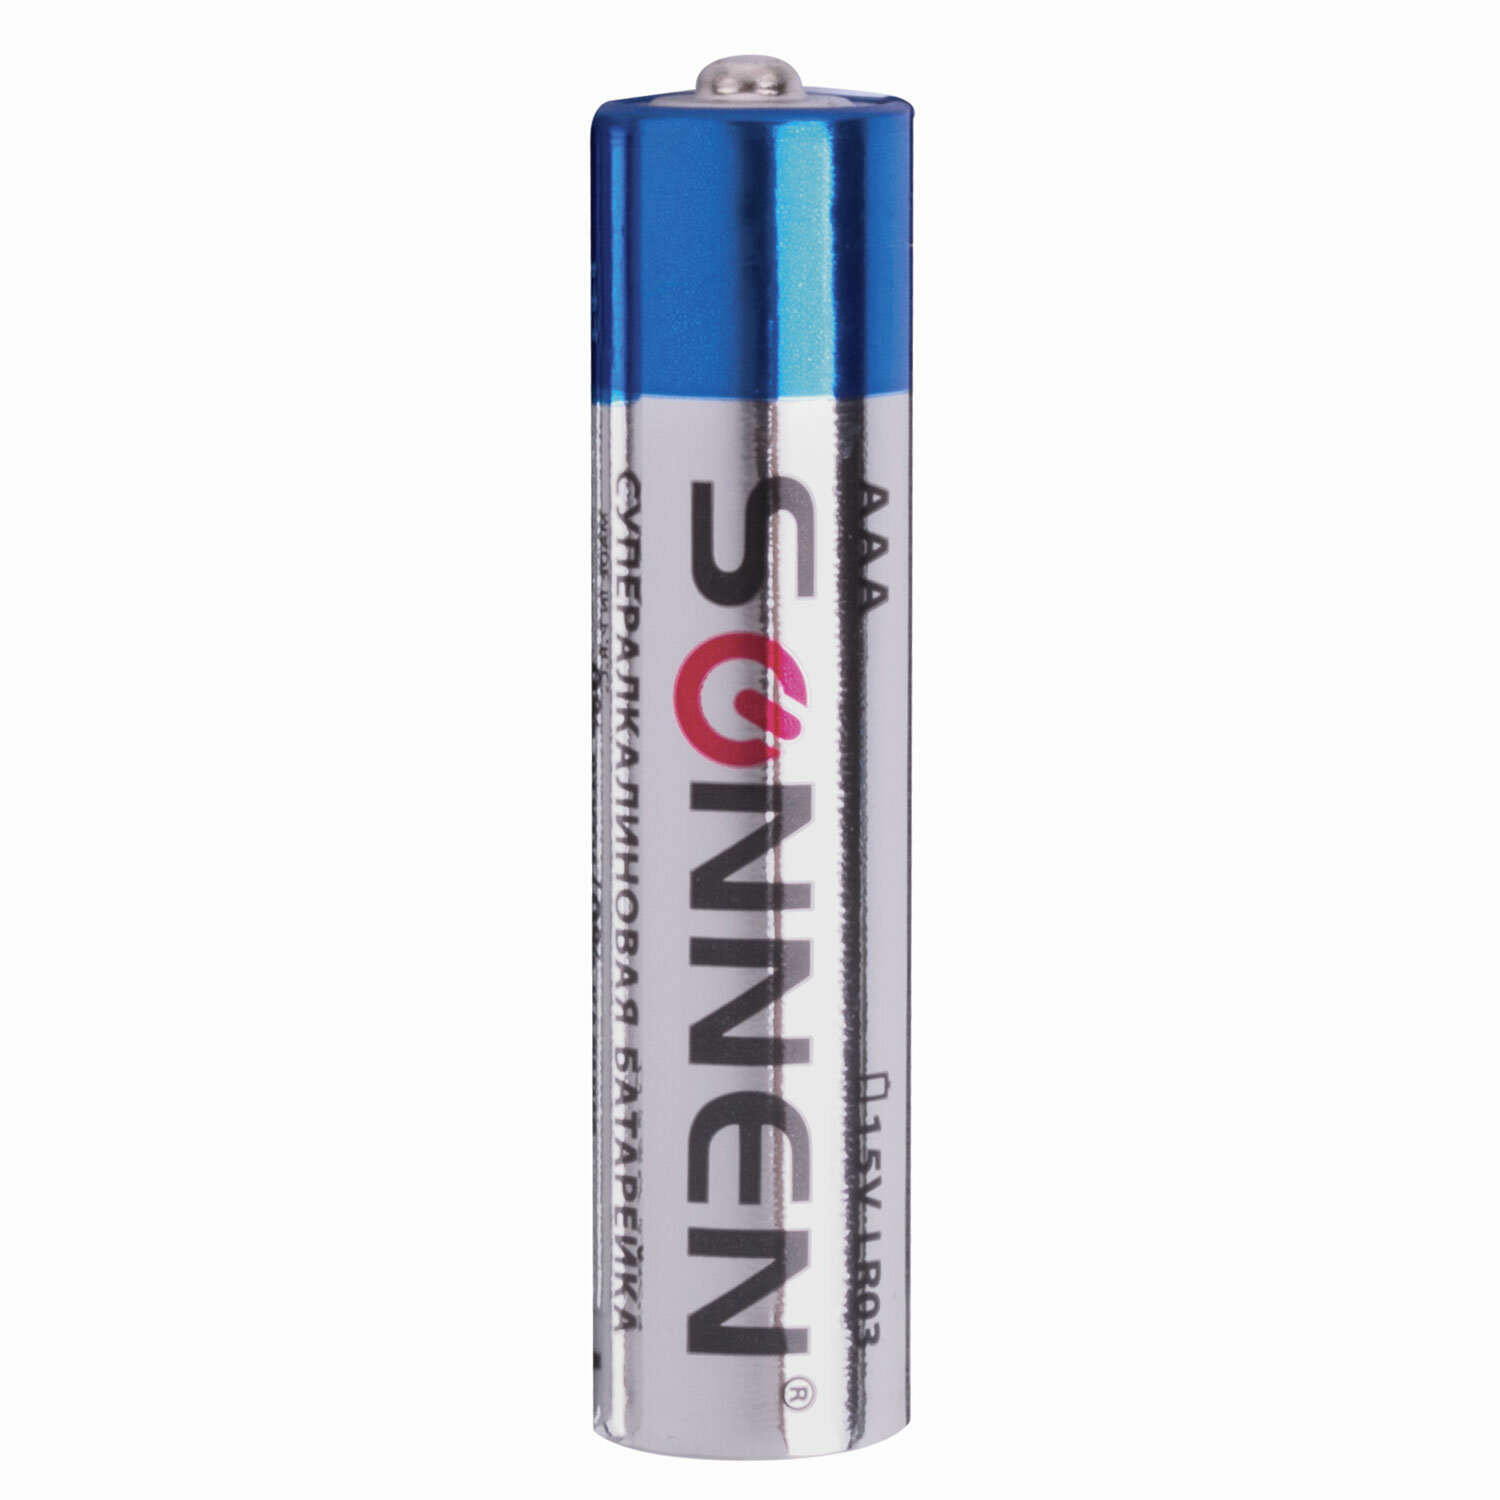 Батарейки SONNEN Super Alkaline, AAA (LR03, 24А), алкалиновые, мизинчиковые